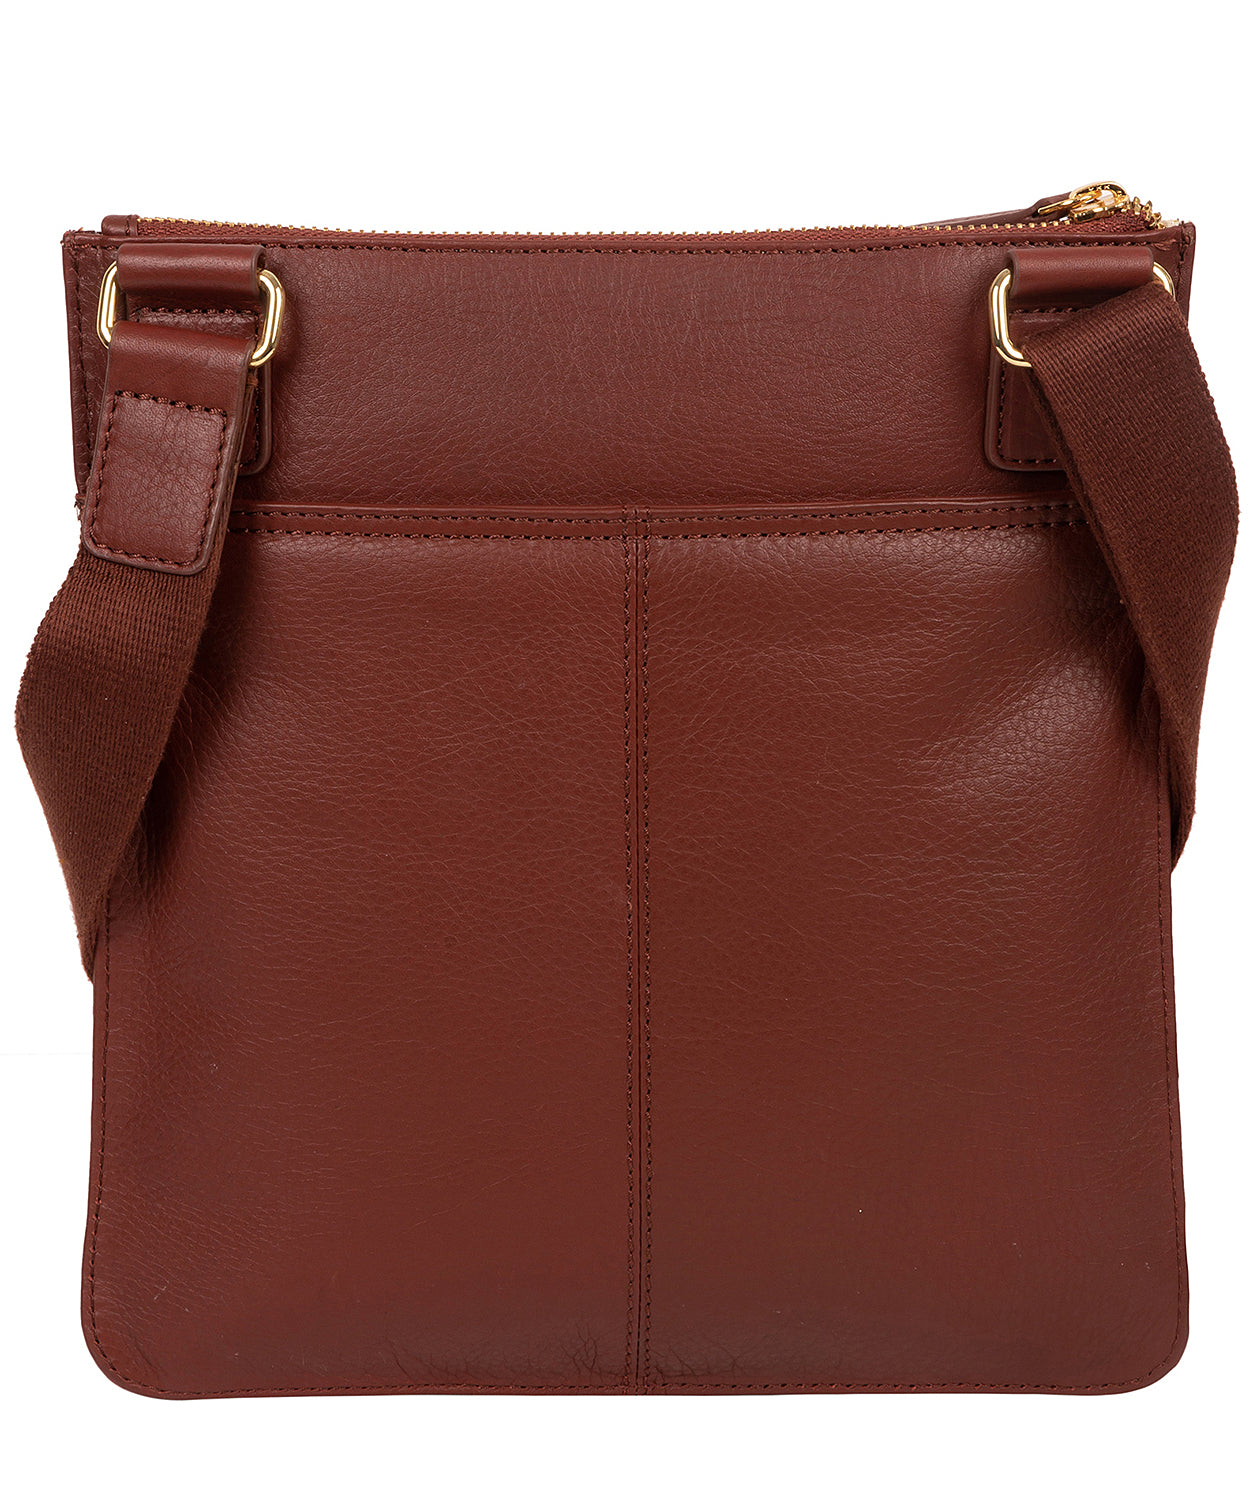 'Langley' Chestnut Leather Cross Body Bag